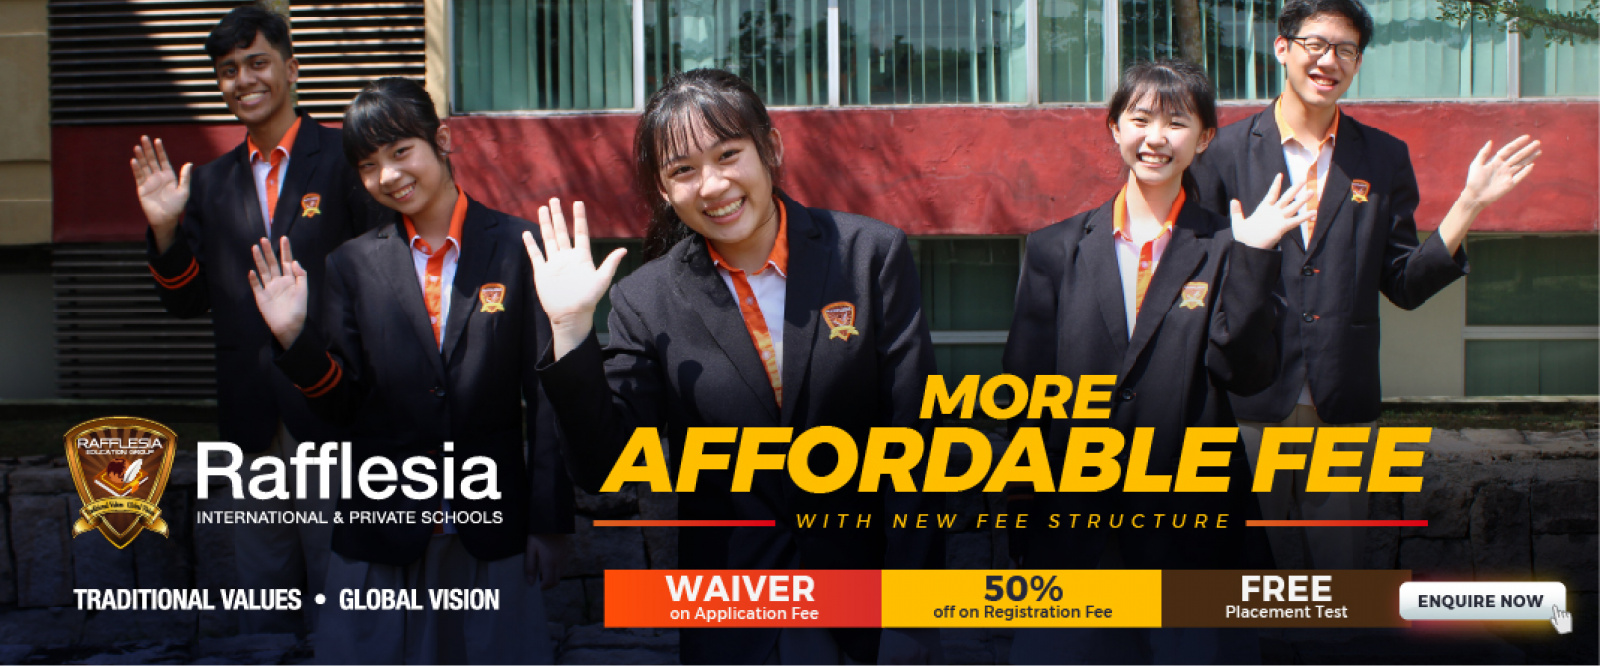 Rafflesia International School Kajang Campus is more affordable than ever!